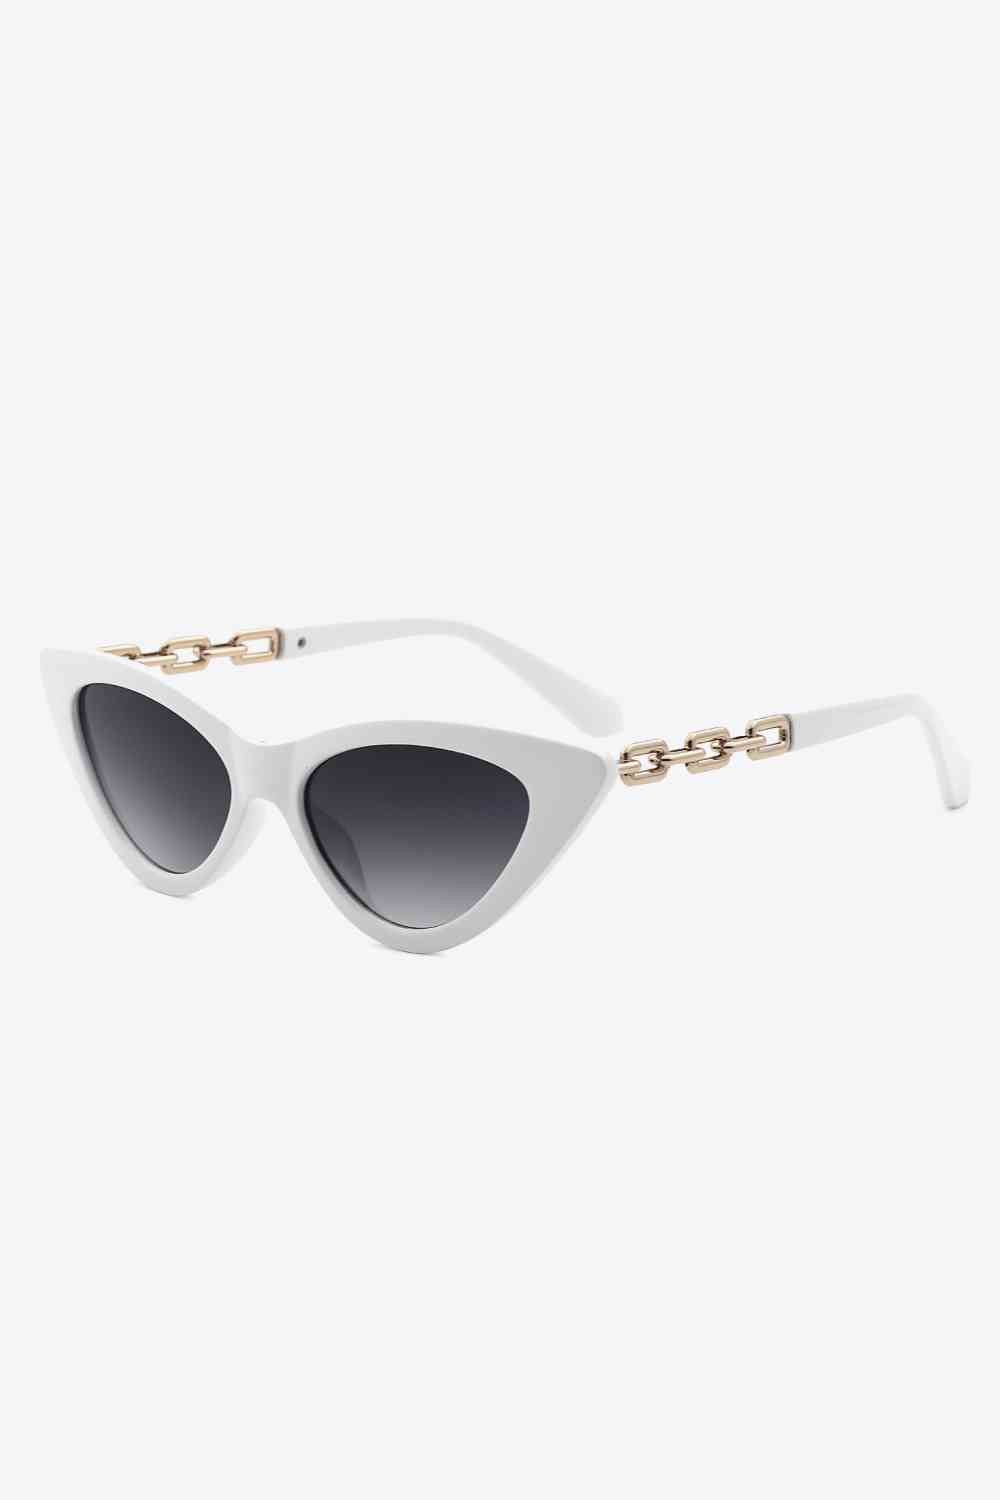 TEEK - Size Chain Cat-Eye Sunglasses EYEGLASSES TEEK Trend Light Gray  